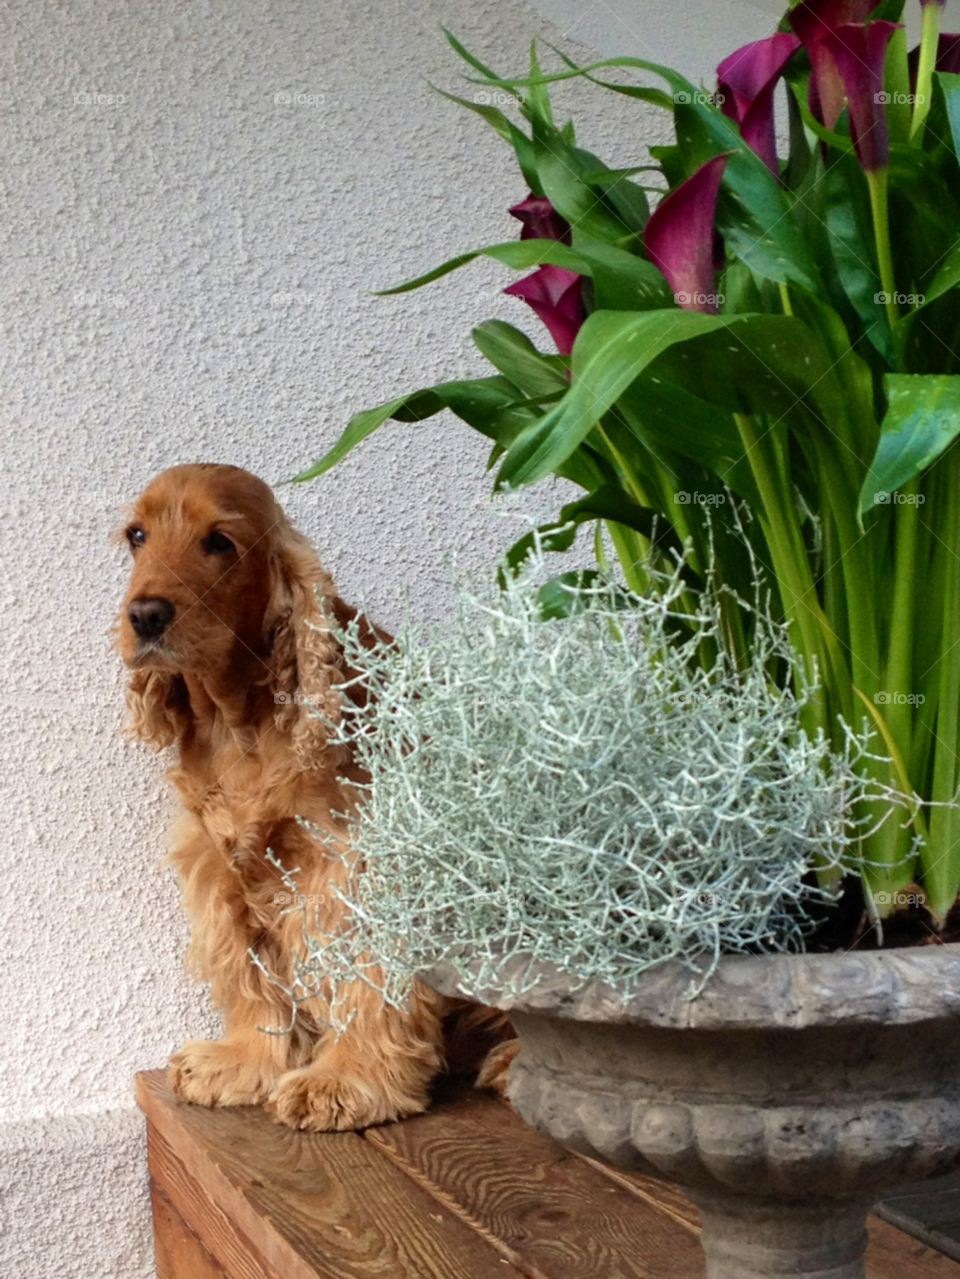 flower dog blommor hund by cabday